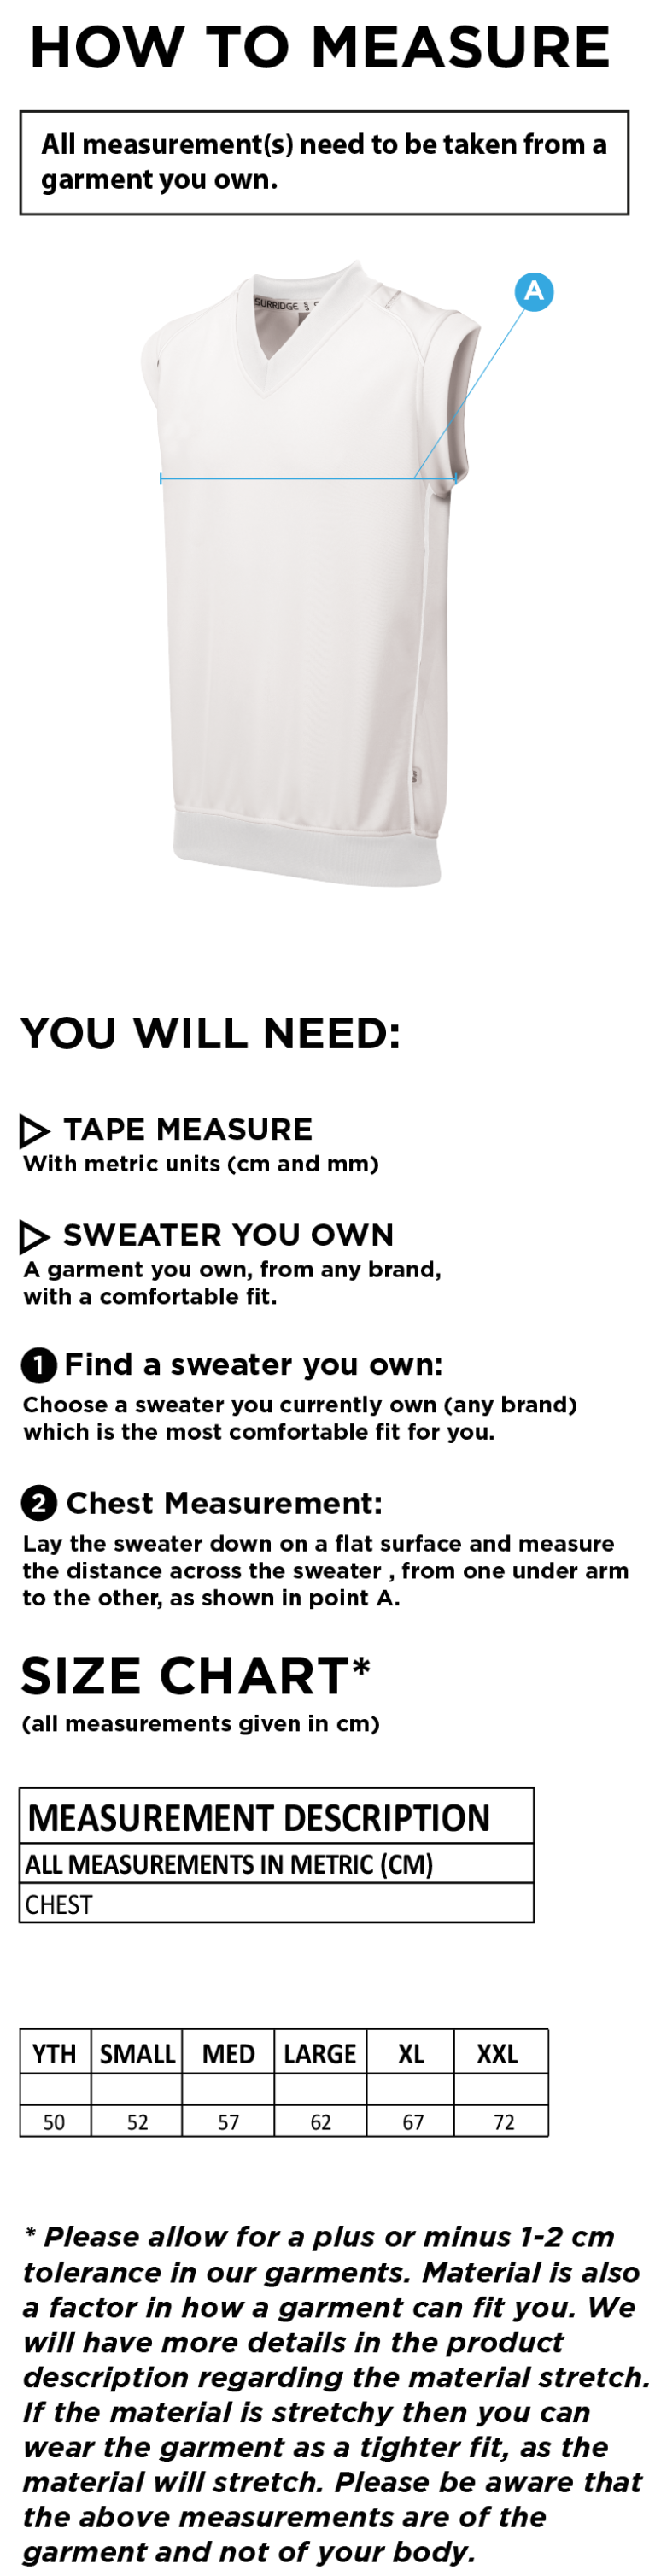 Byfleet CC Senior Sleeveless Sweater - Size Guide